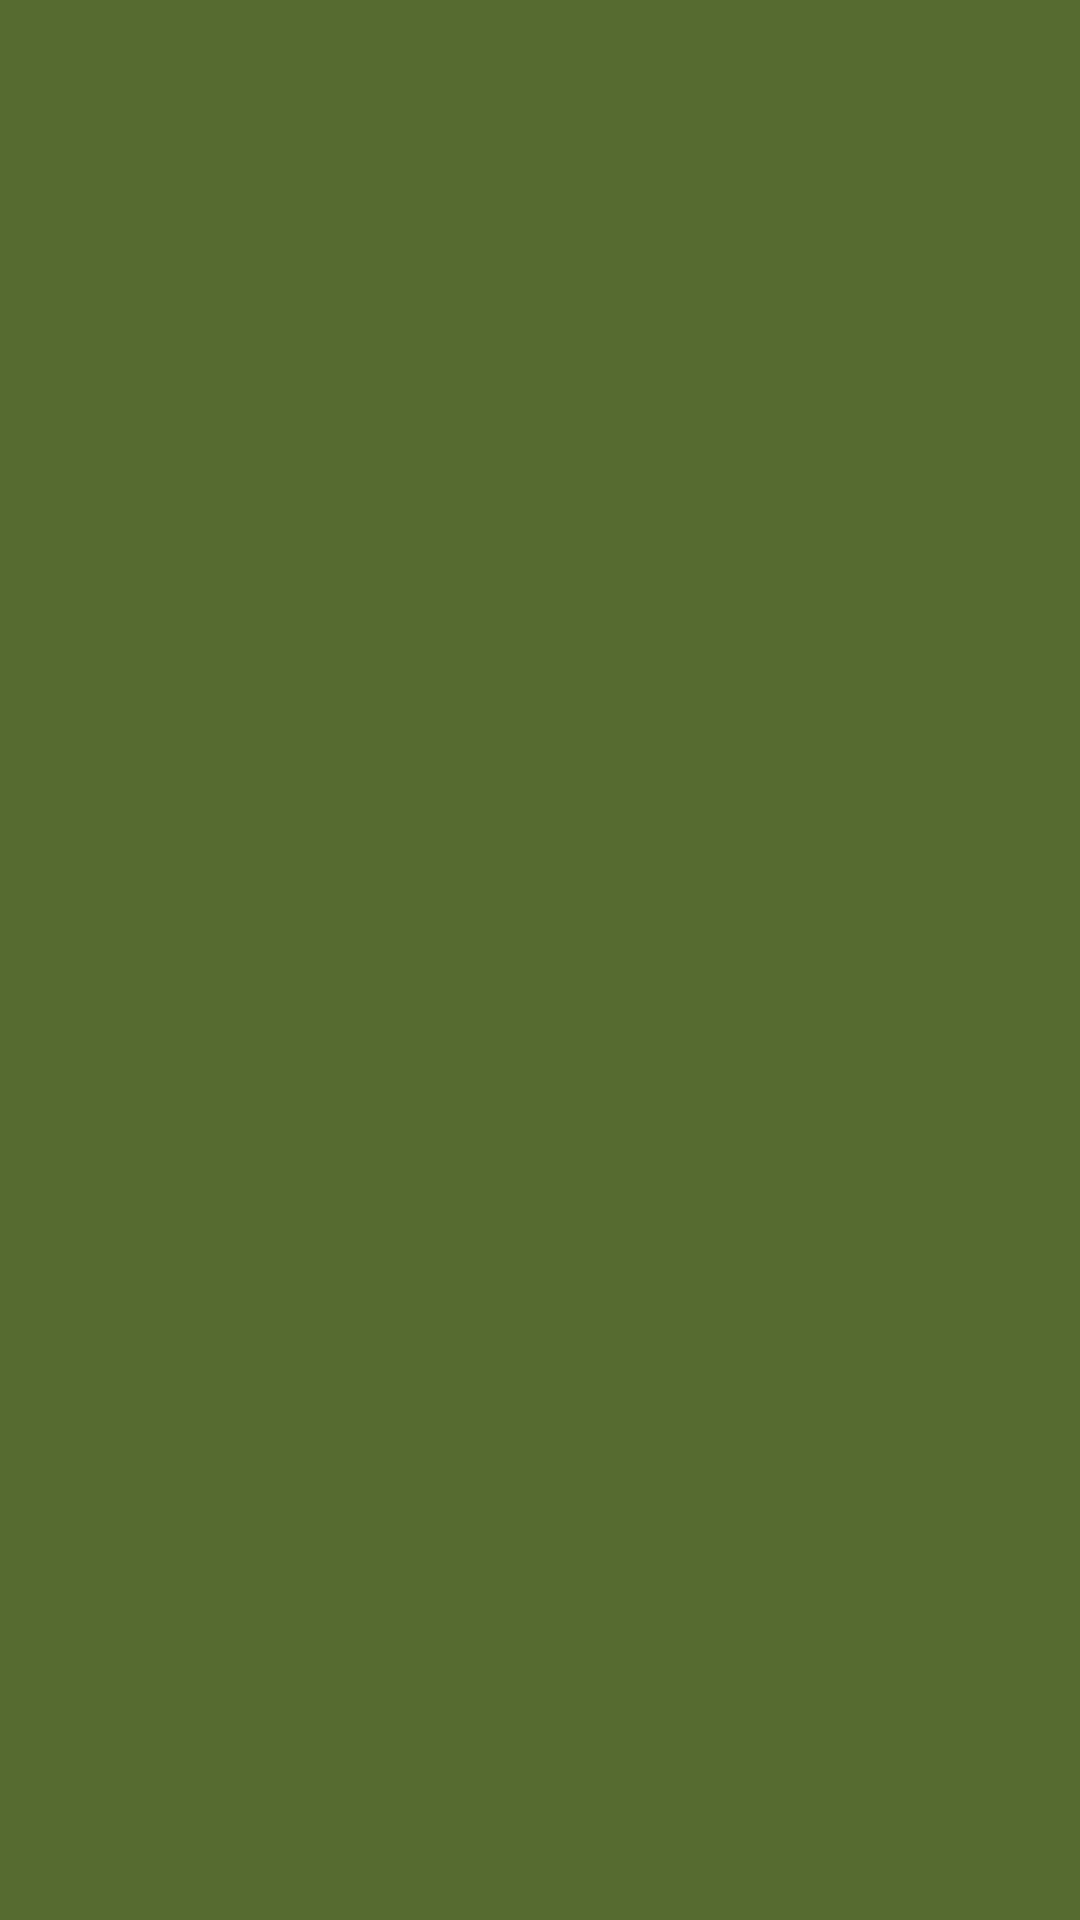 Plain Olive Green Background For Mobile